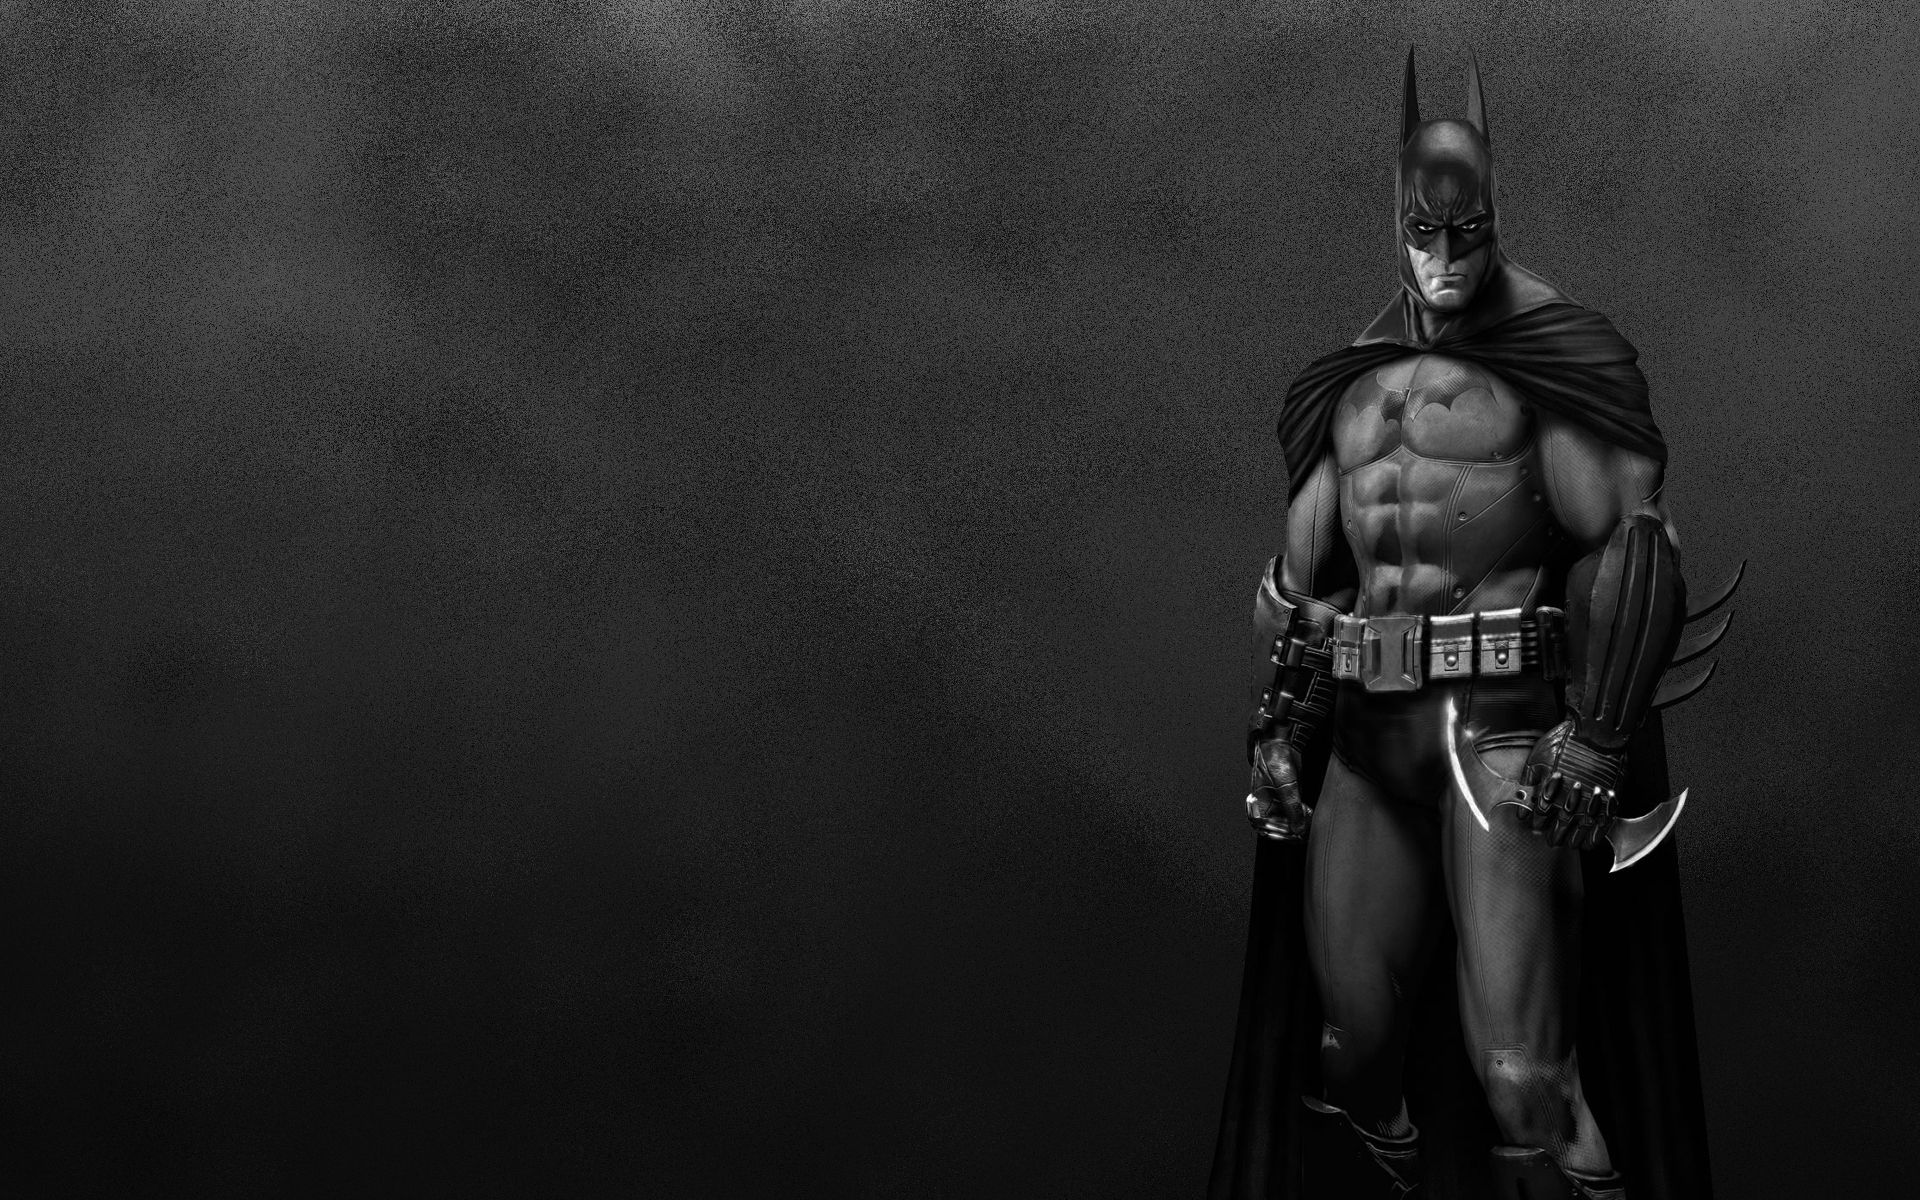 Batman Wallpaper HD 2016 download free | Wallpapers, Backgrounds ...